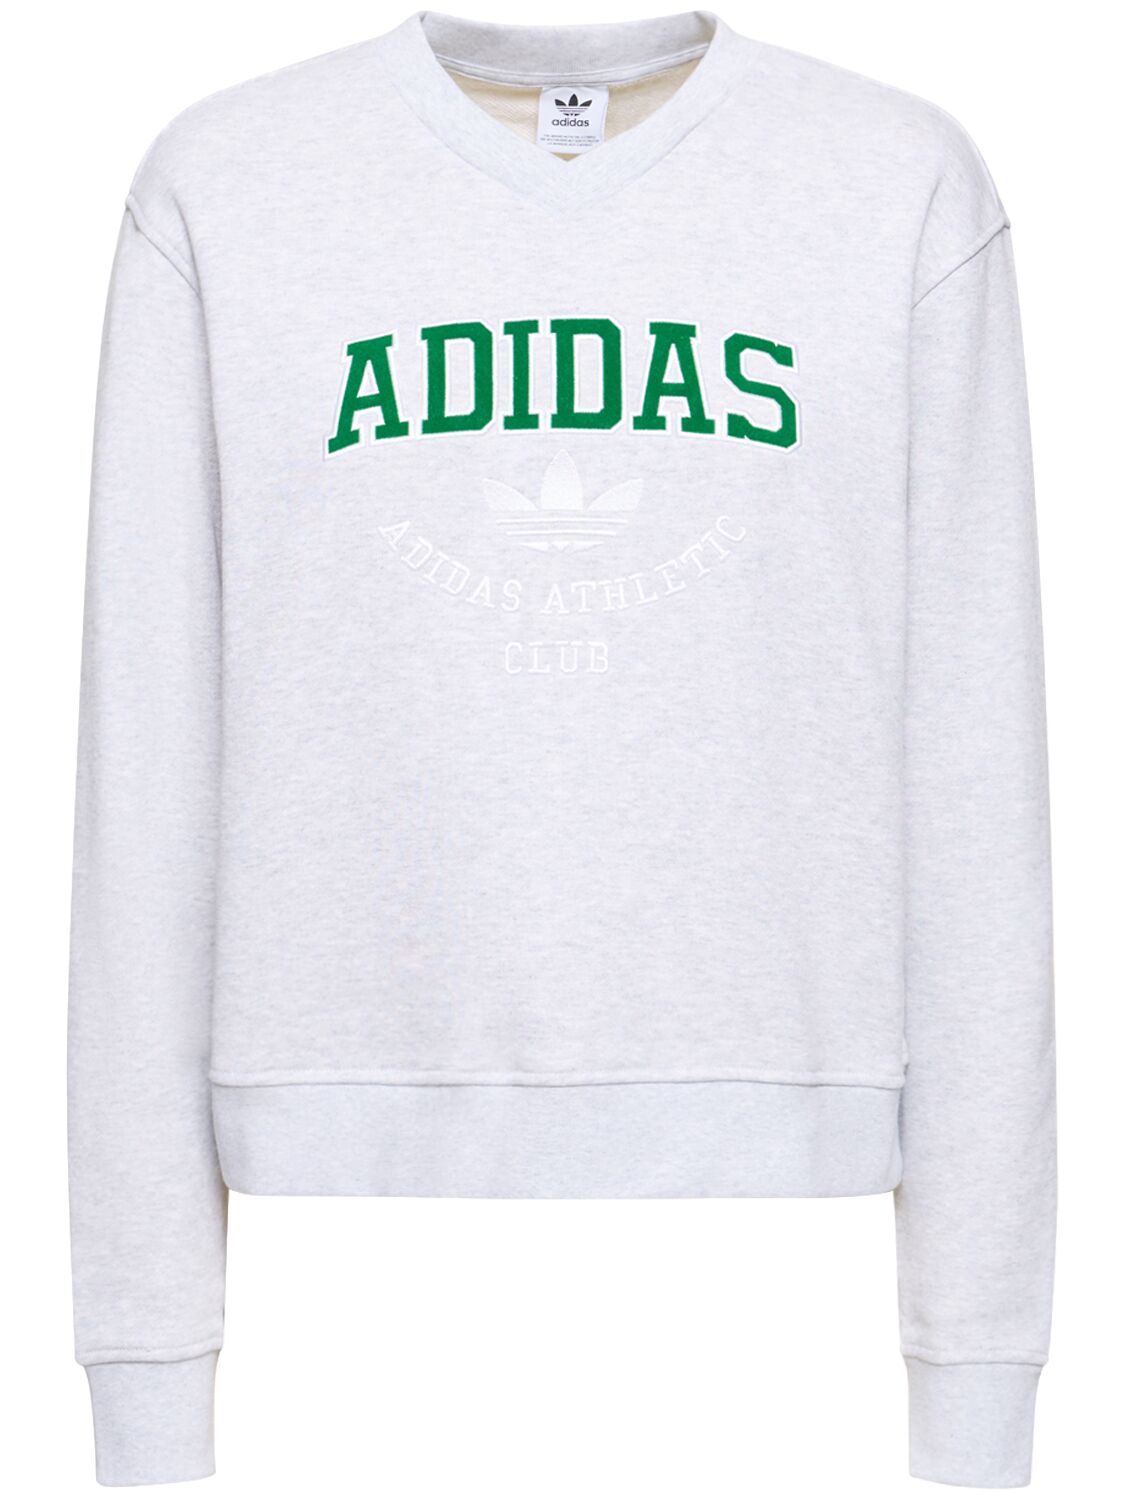 Adidas Originals ModeSens Gfx Cotton In Printed Grey | Sweatshirt